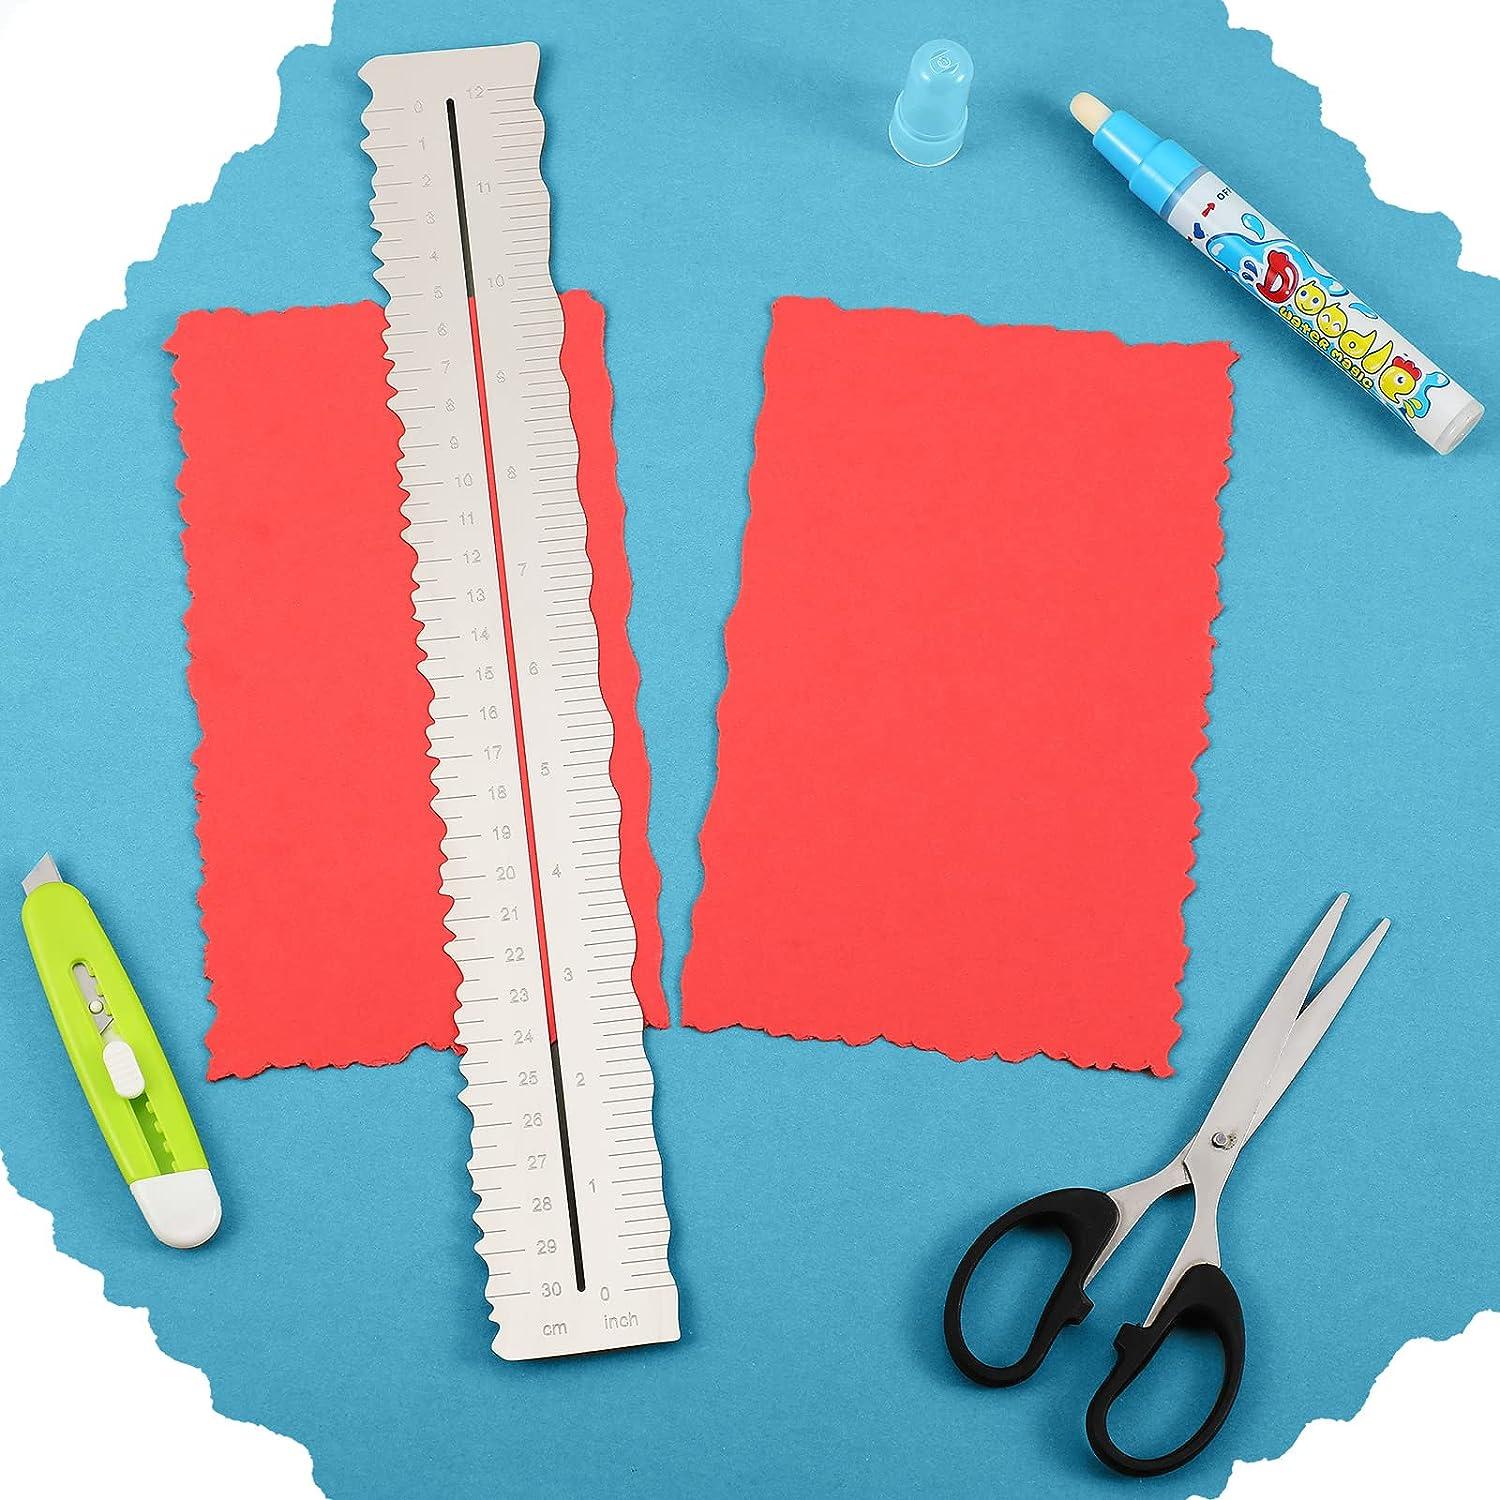 Irregular Edges Ruler, 3 Pcs DIY Making Die Cuts For Paper Crafts